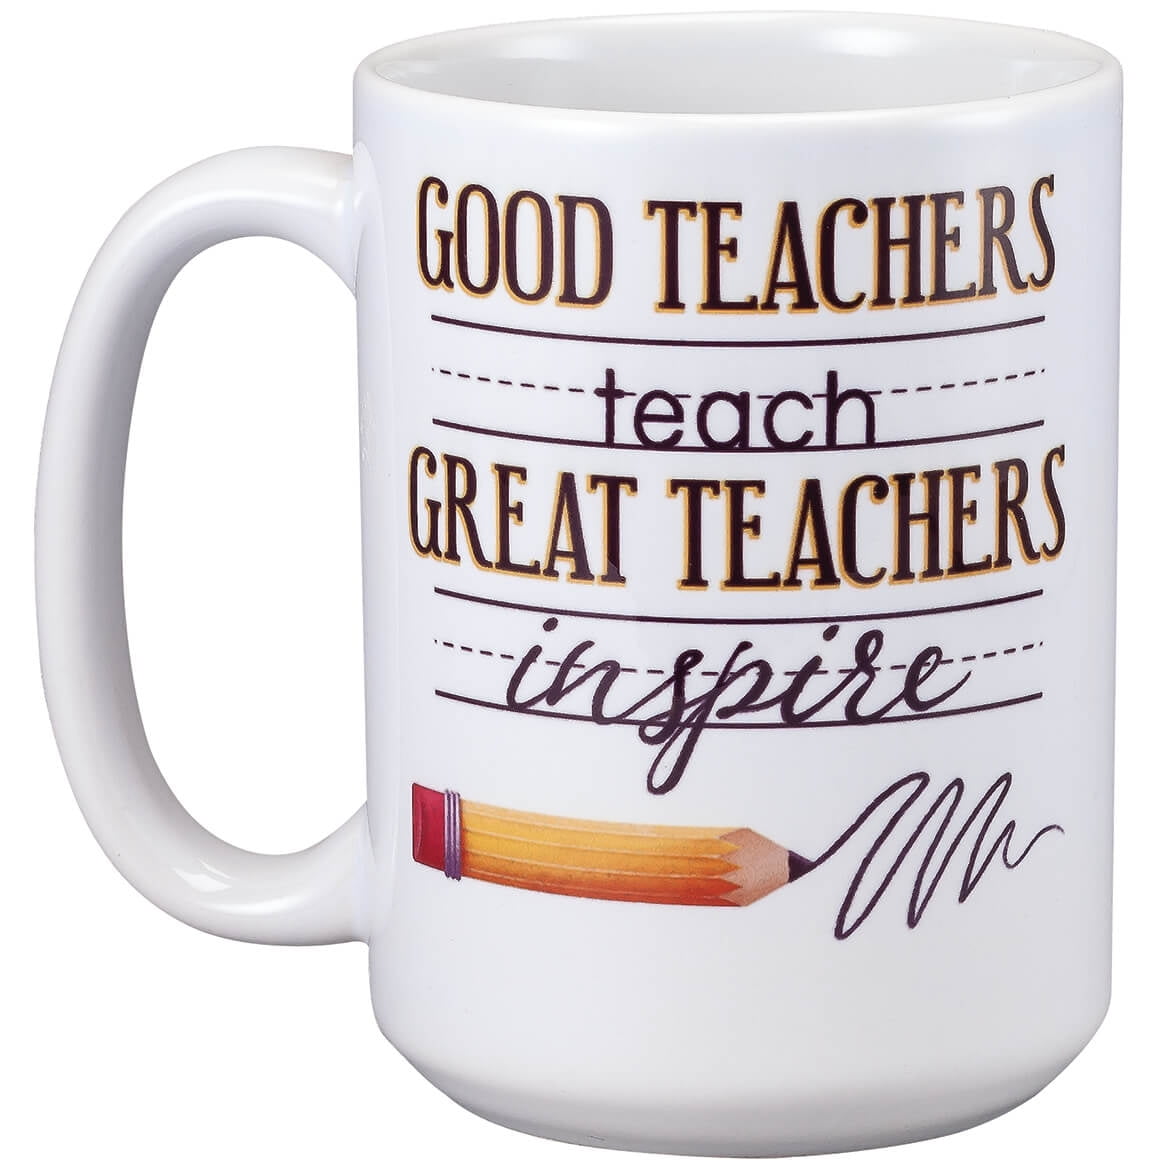 Custom mug 11-15 oz ceramic mug Personalized Mug custom teacher gift custom mug teacher gift super hero teacher mug teacher mug